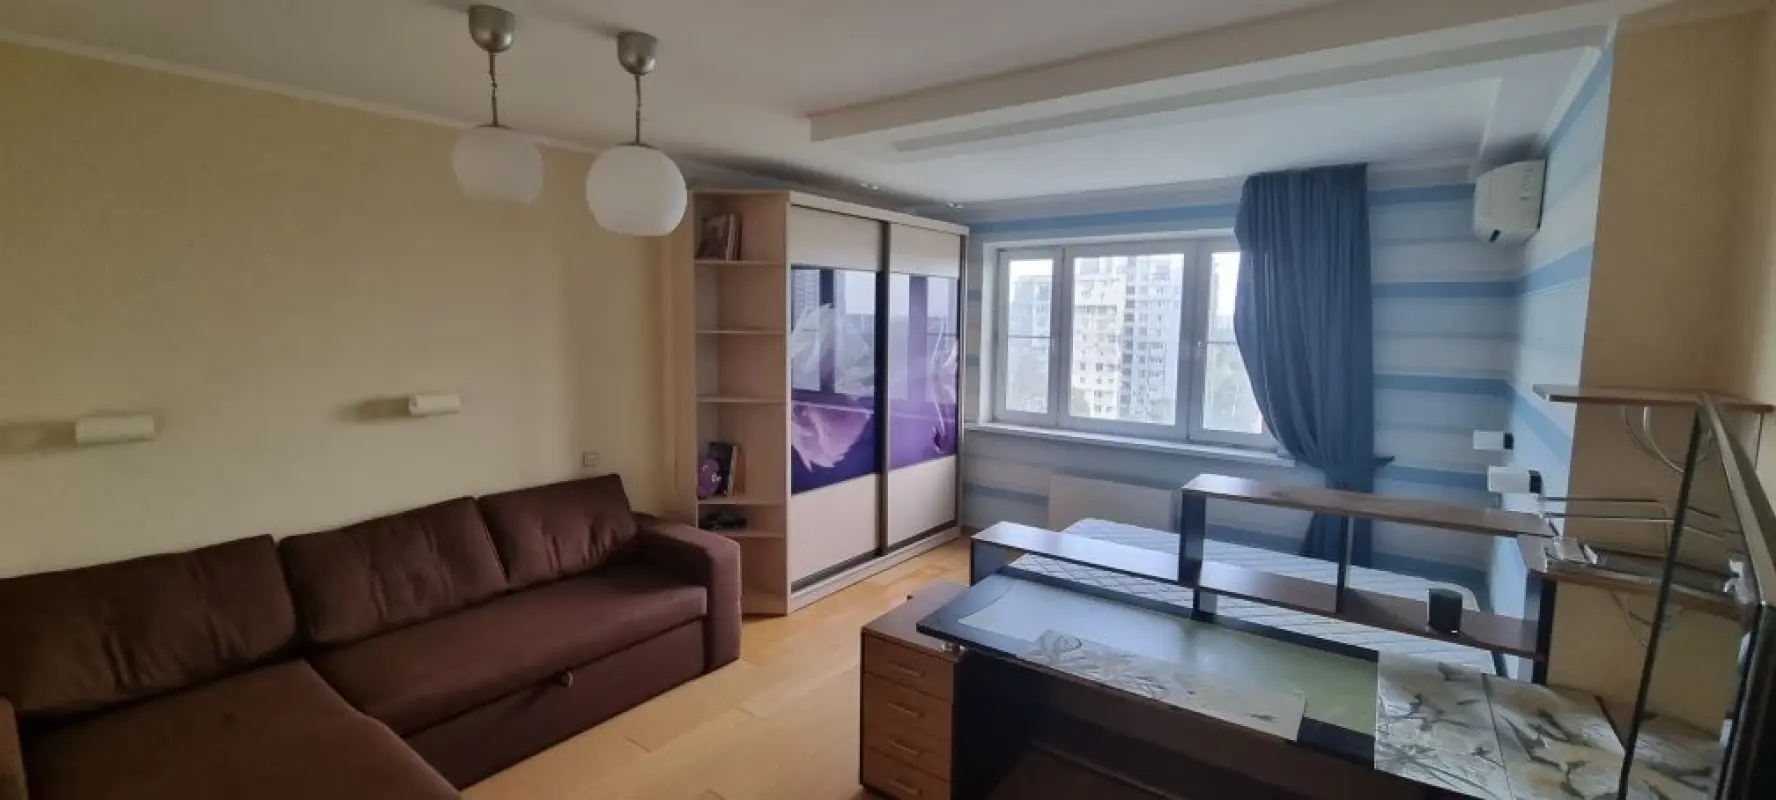 Apartment for rent - Lvivska Street